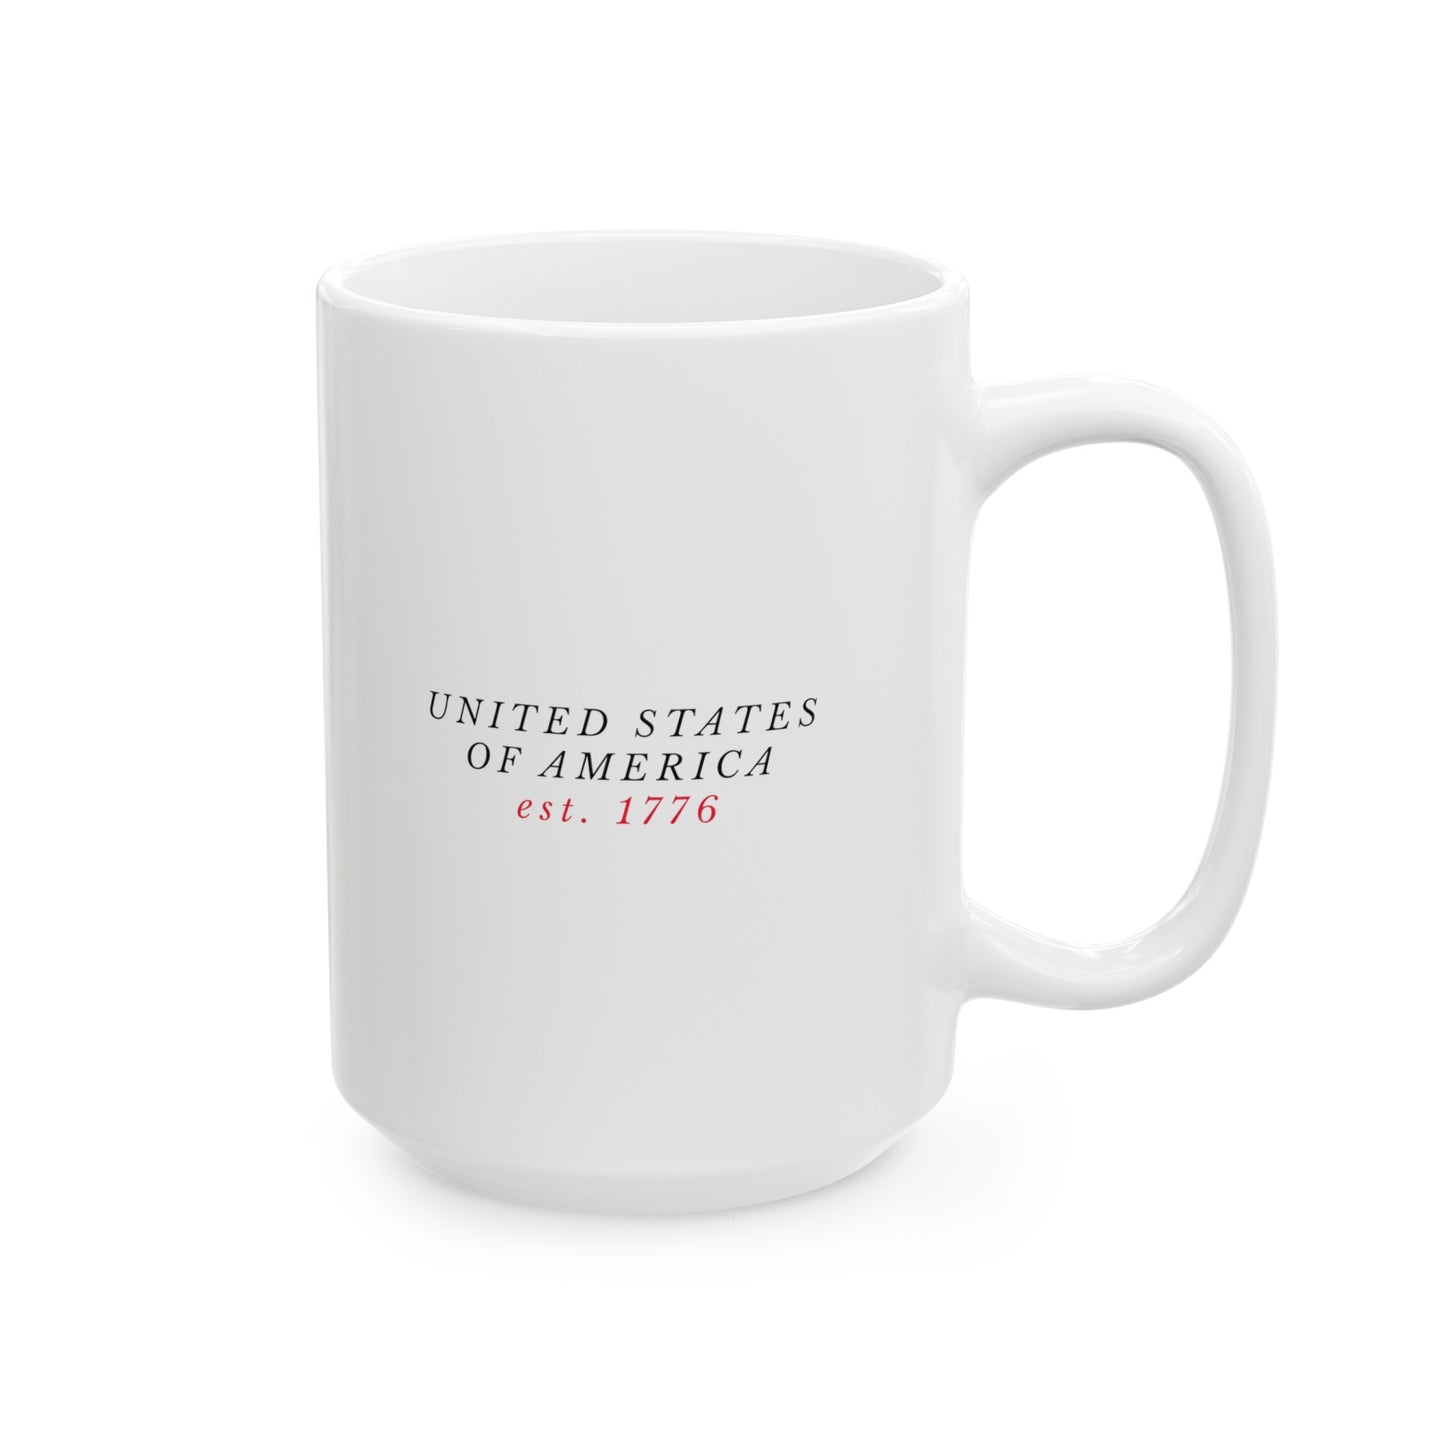 United States of America est. 1776 White Ceramic Mug (11oz, 15oz)